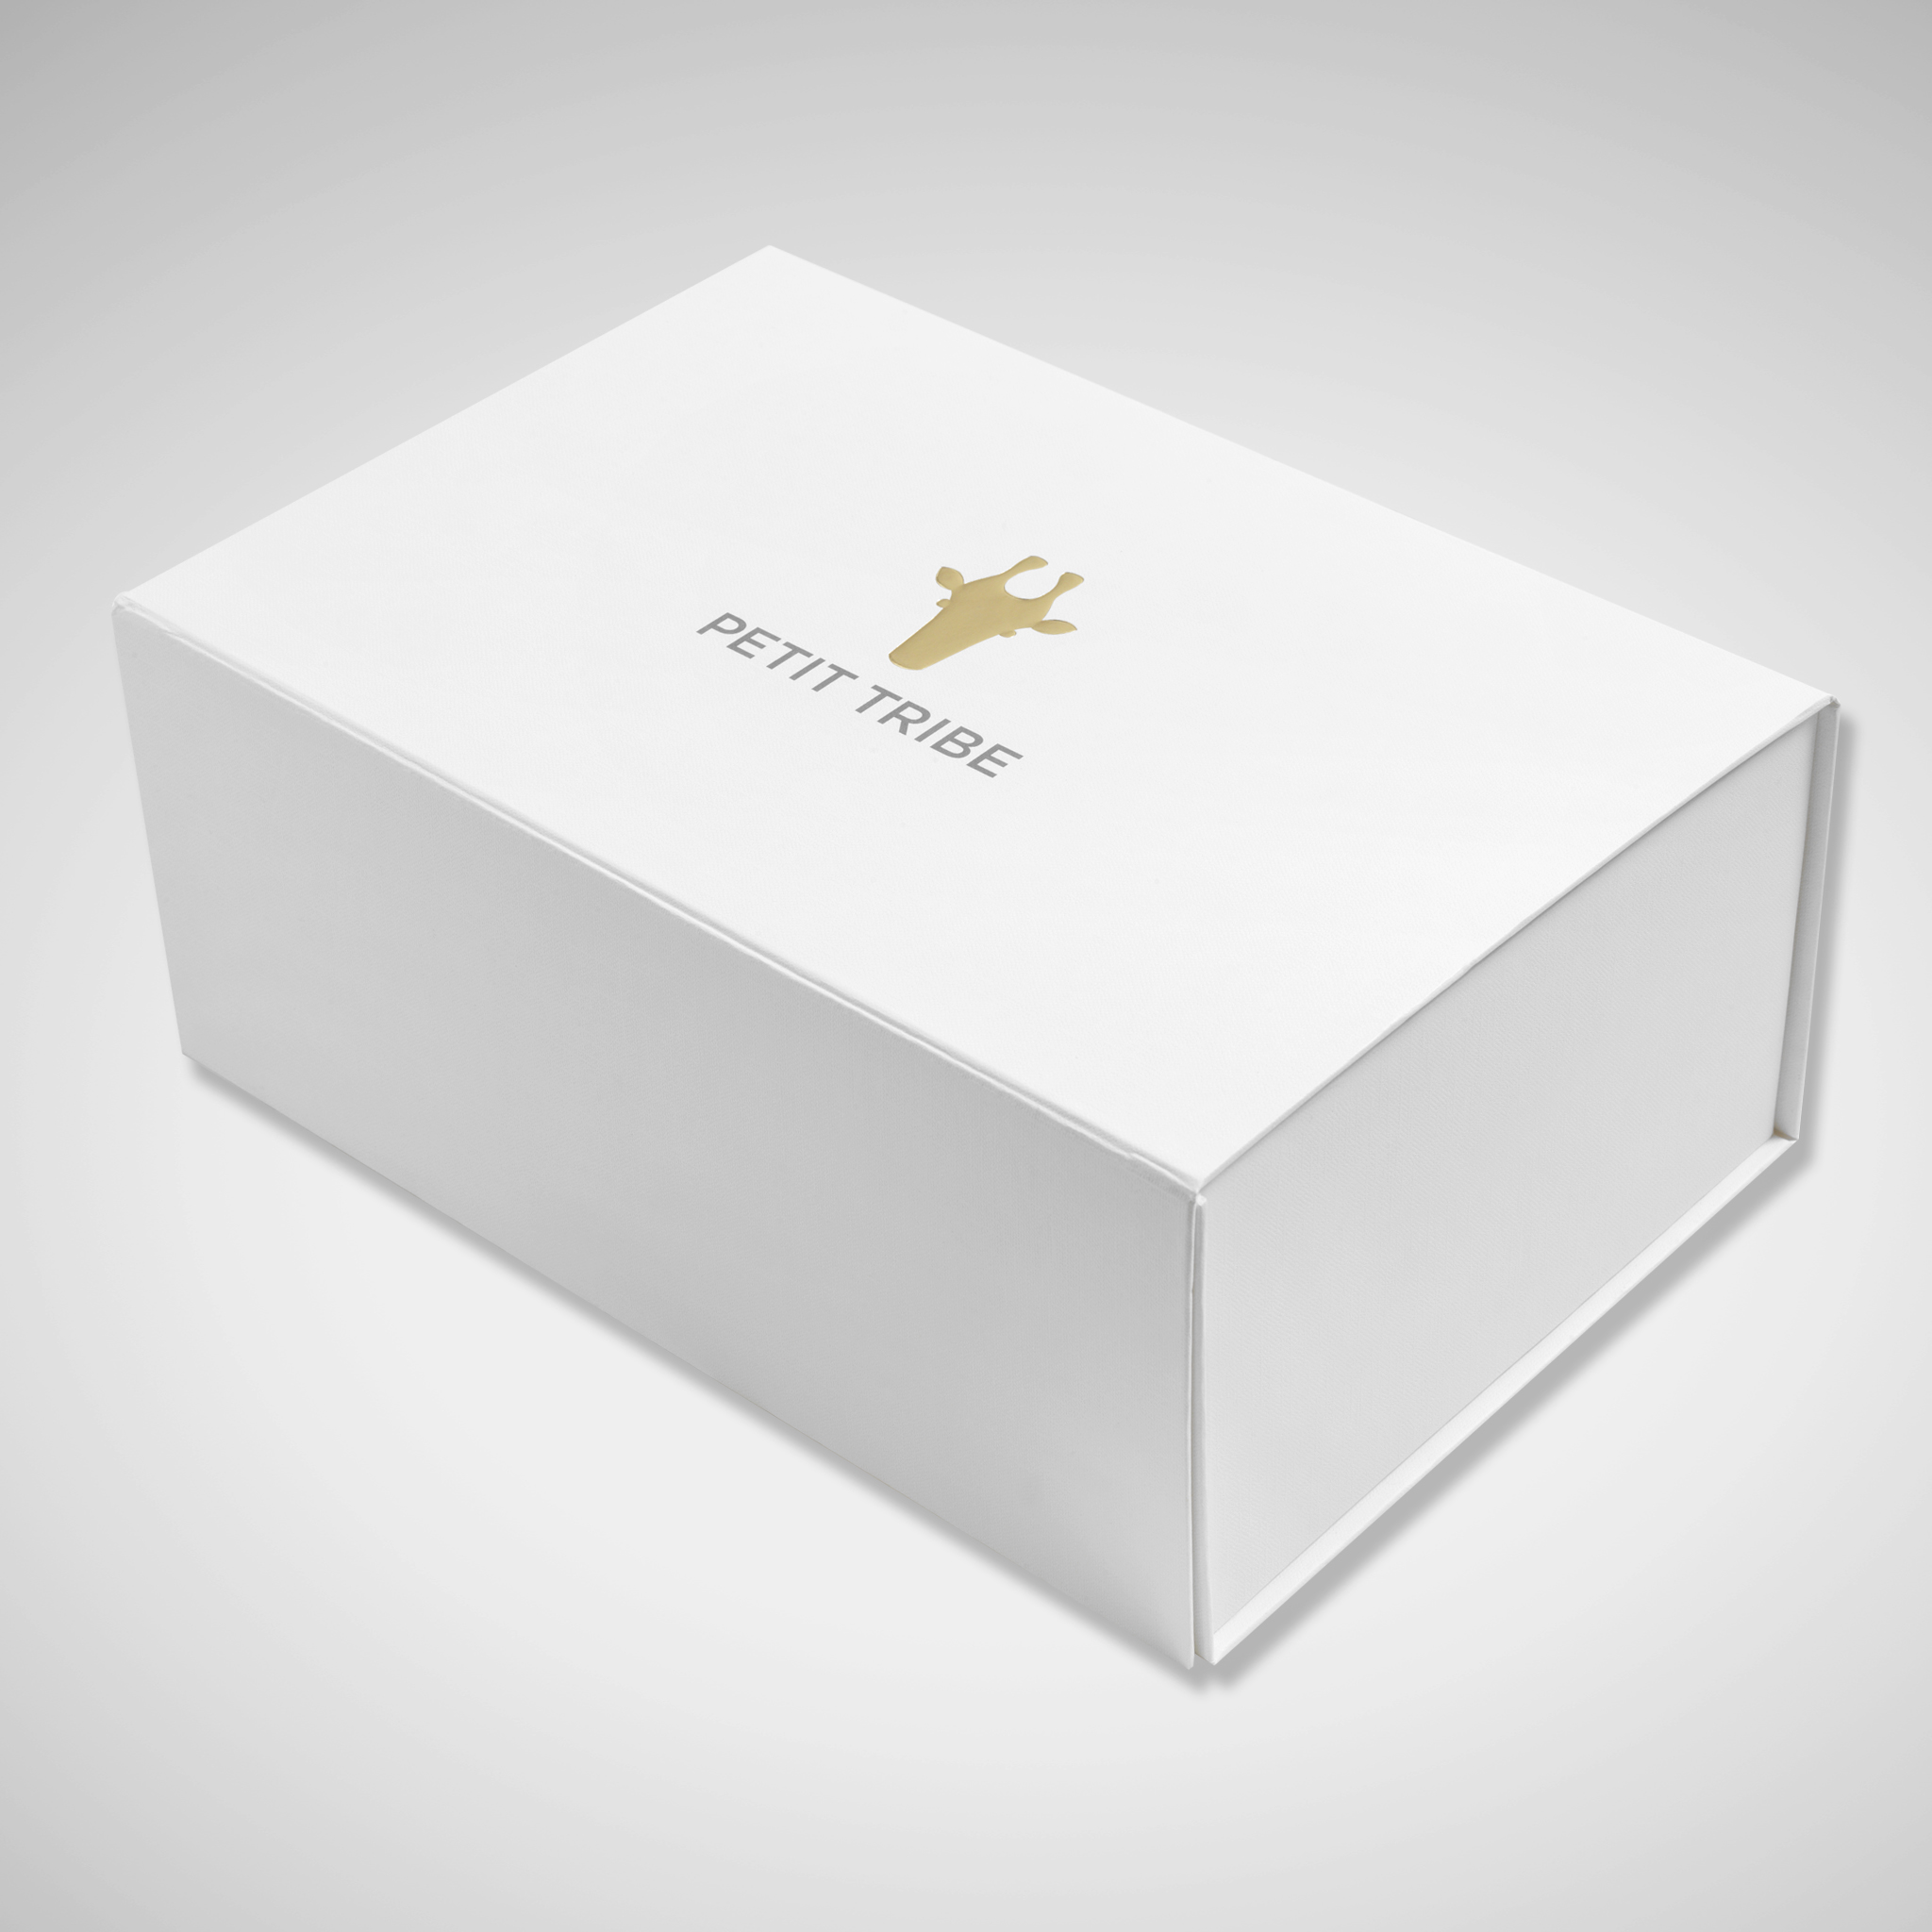 Download Free photo: White gift box - Bow, Isolated, White - Free ...